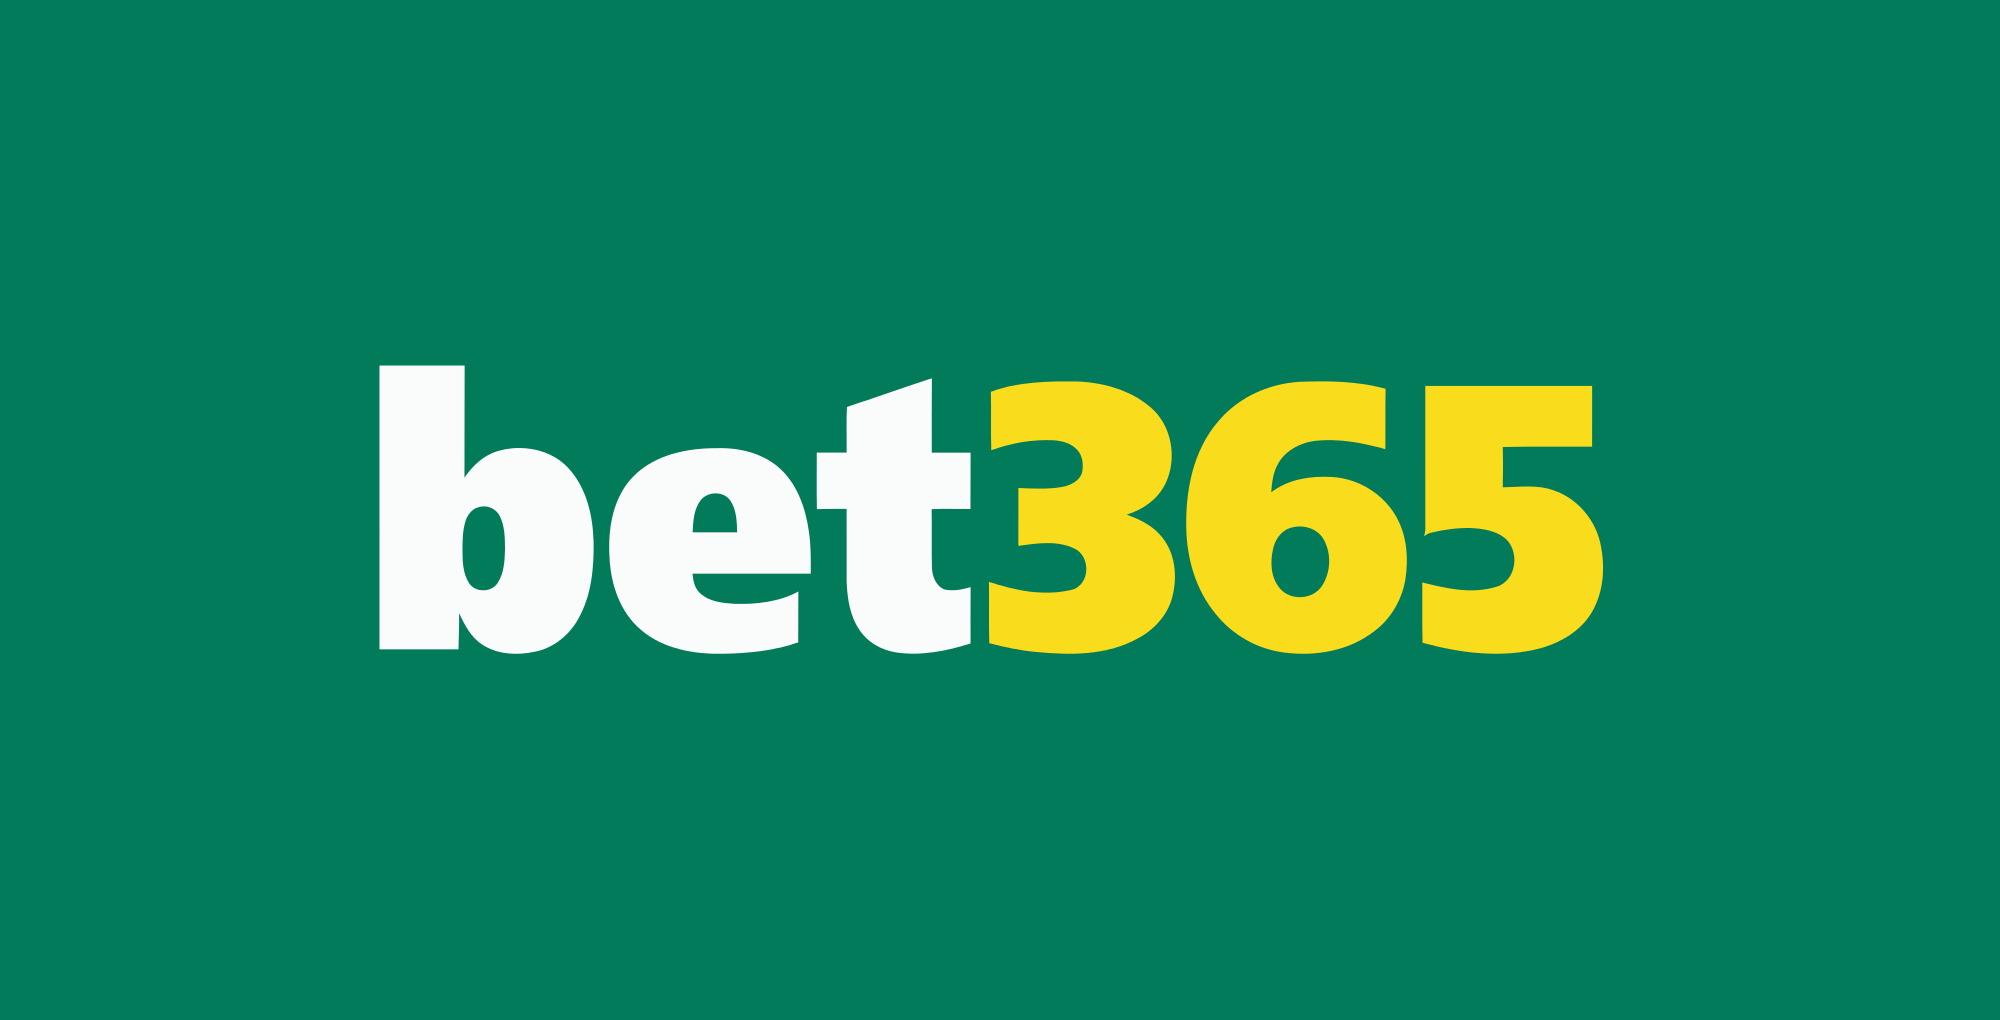 Bonus Bet365